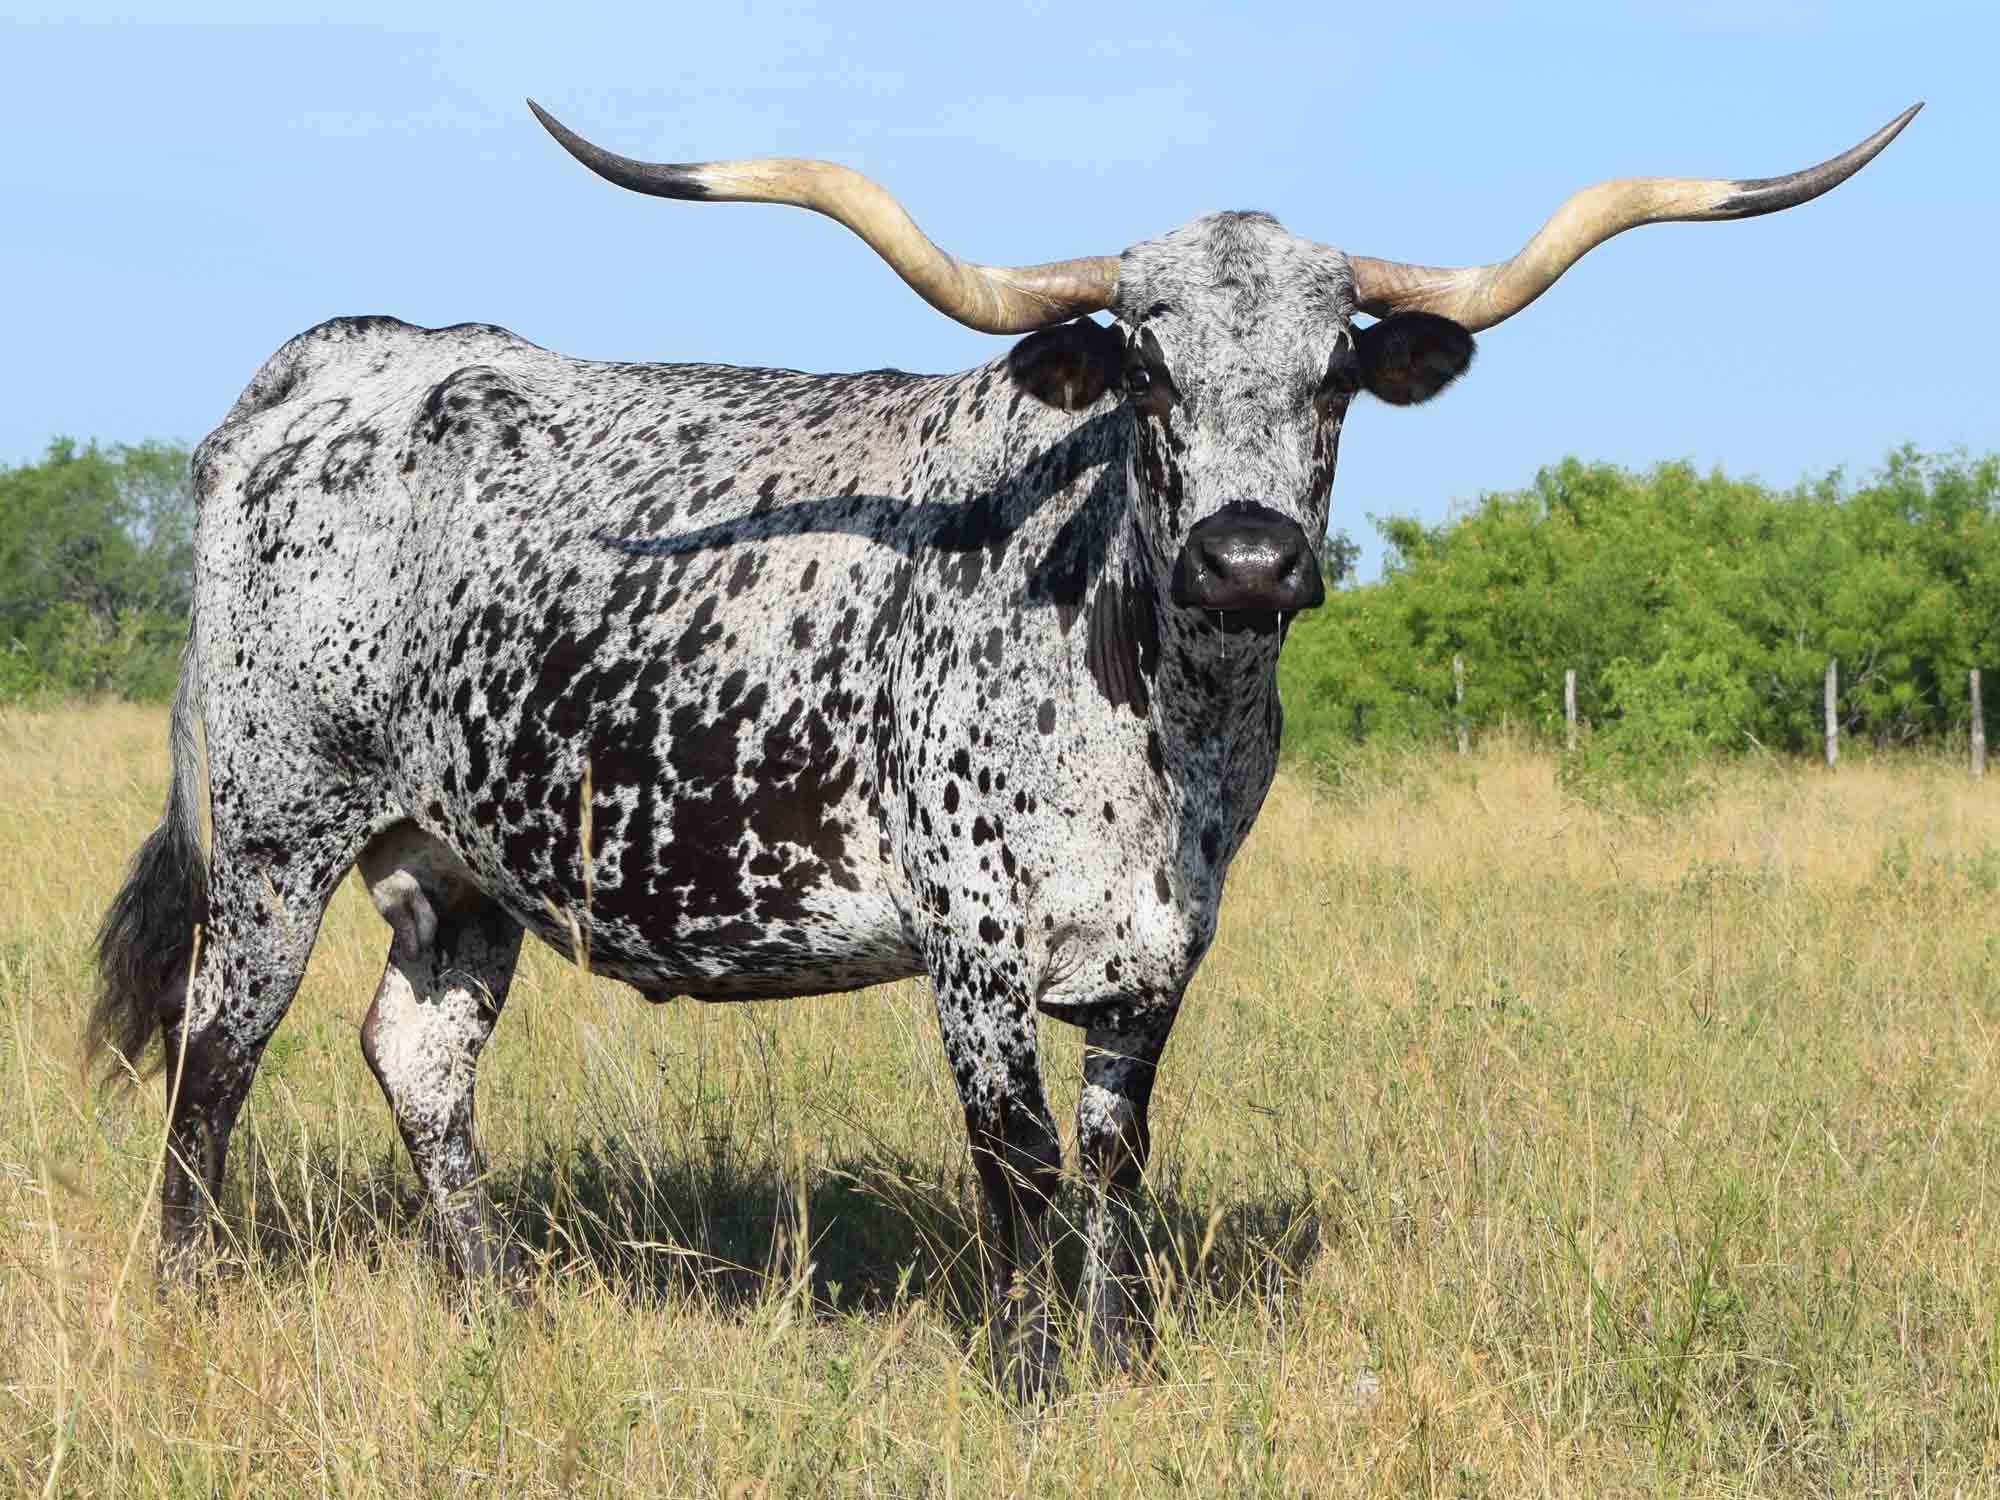 Rocking O Longhorns - texas longhorn cattle for sale Austin, Texas Longhorn cattle ...2000 x 1500